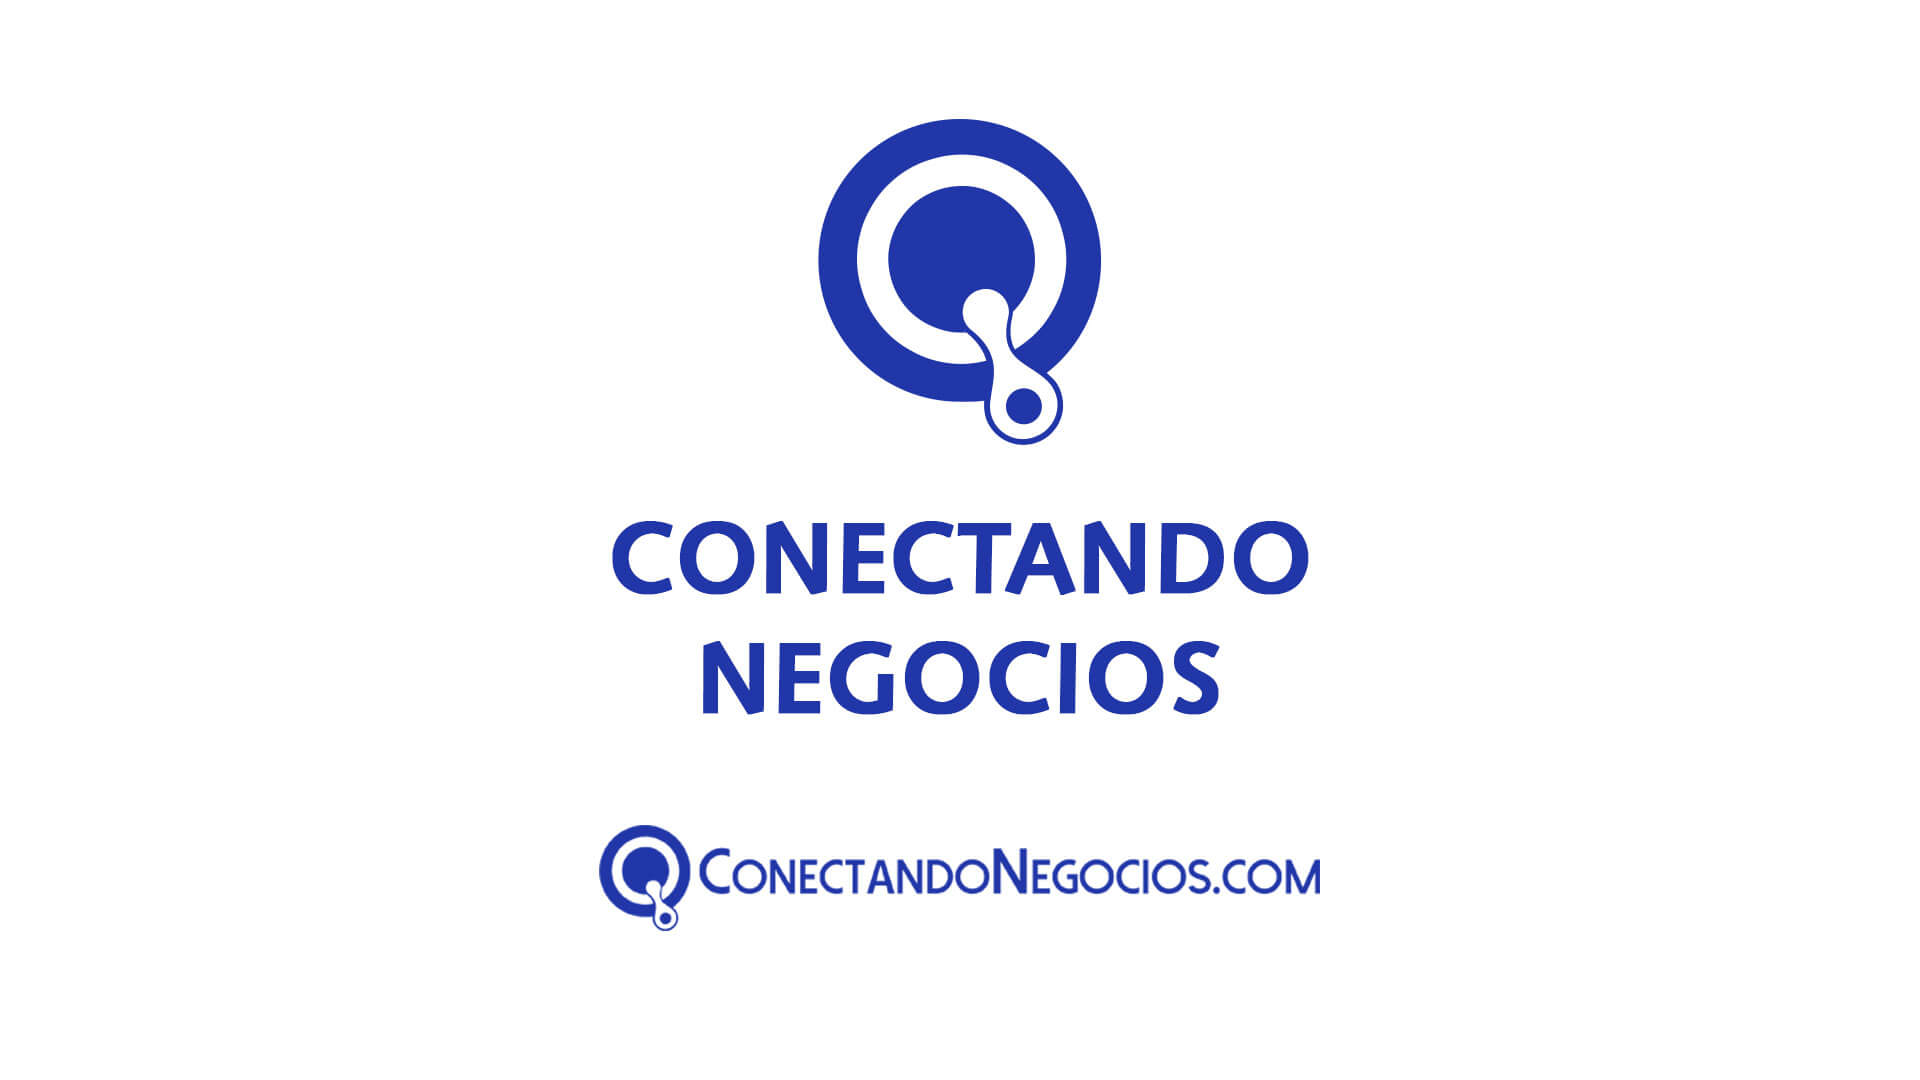 (c) Conectandonegocios.com